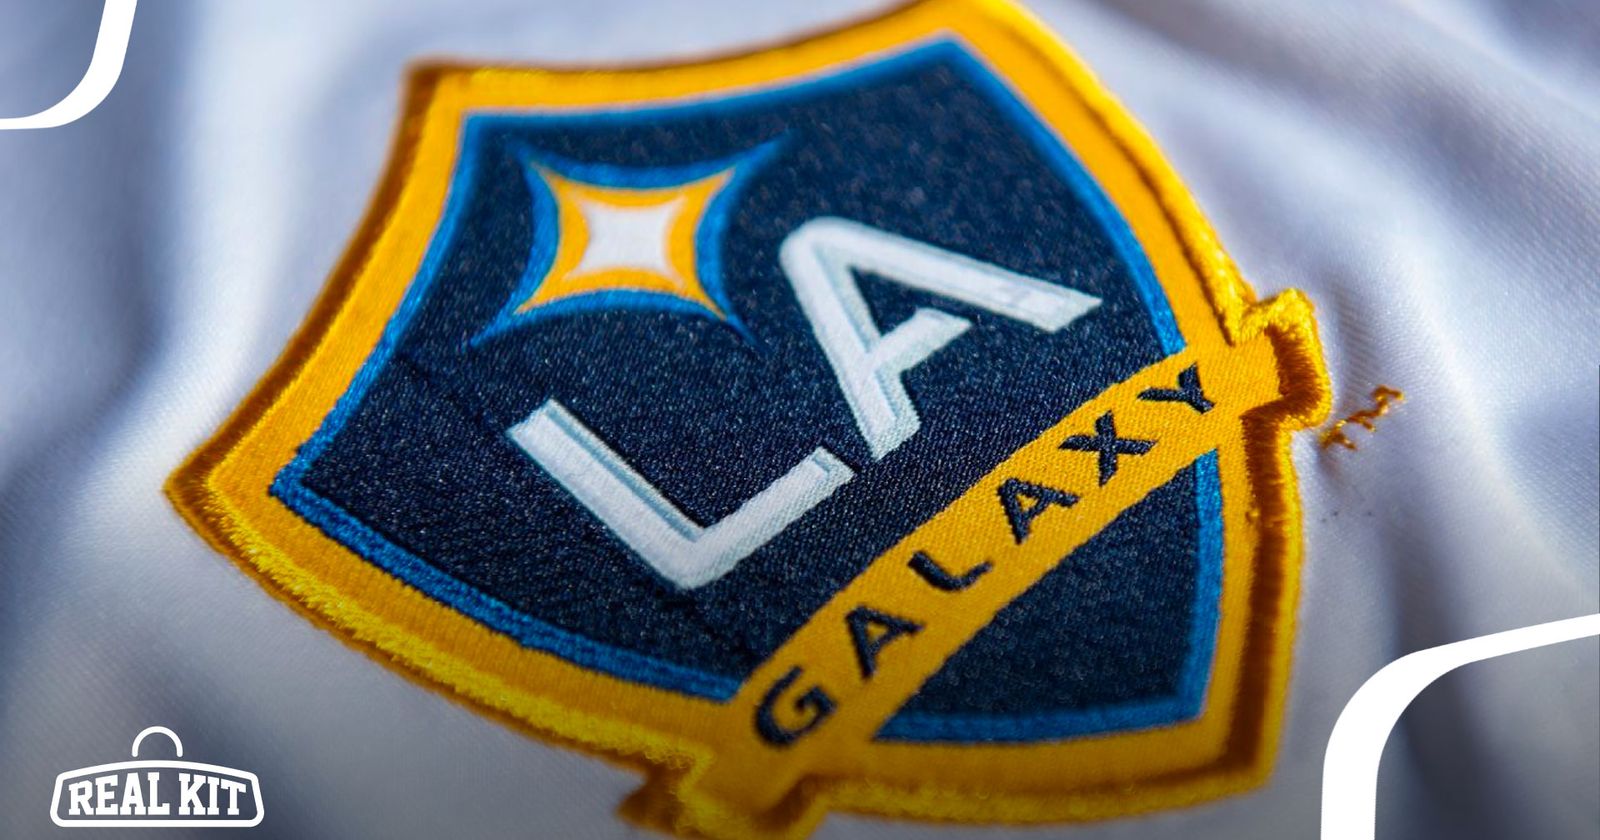 LA Galaxy 2022 Home Kit Released - City of Dreams Kit - Footy